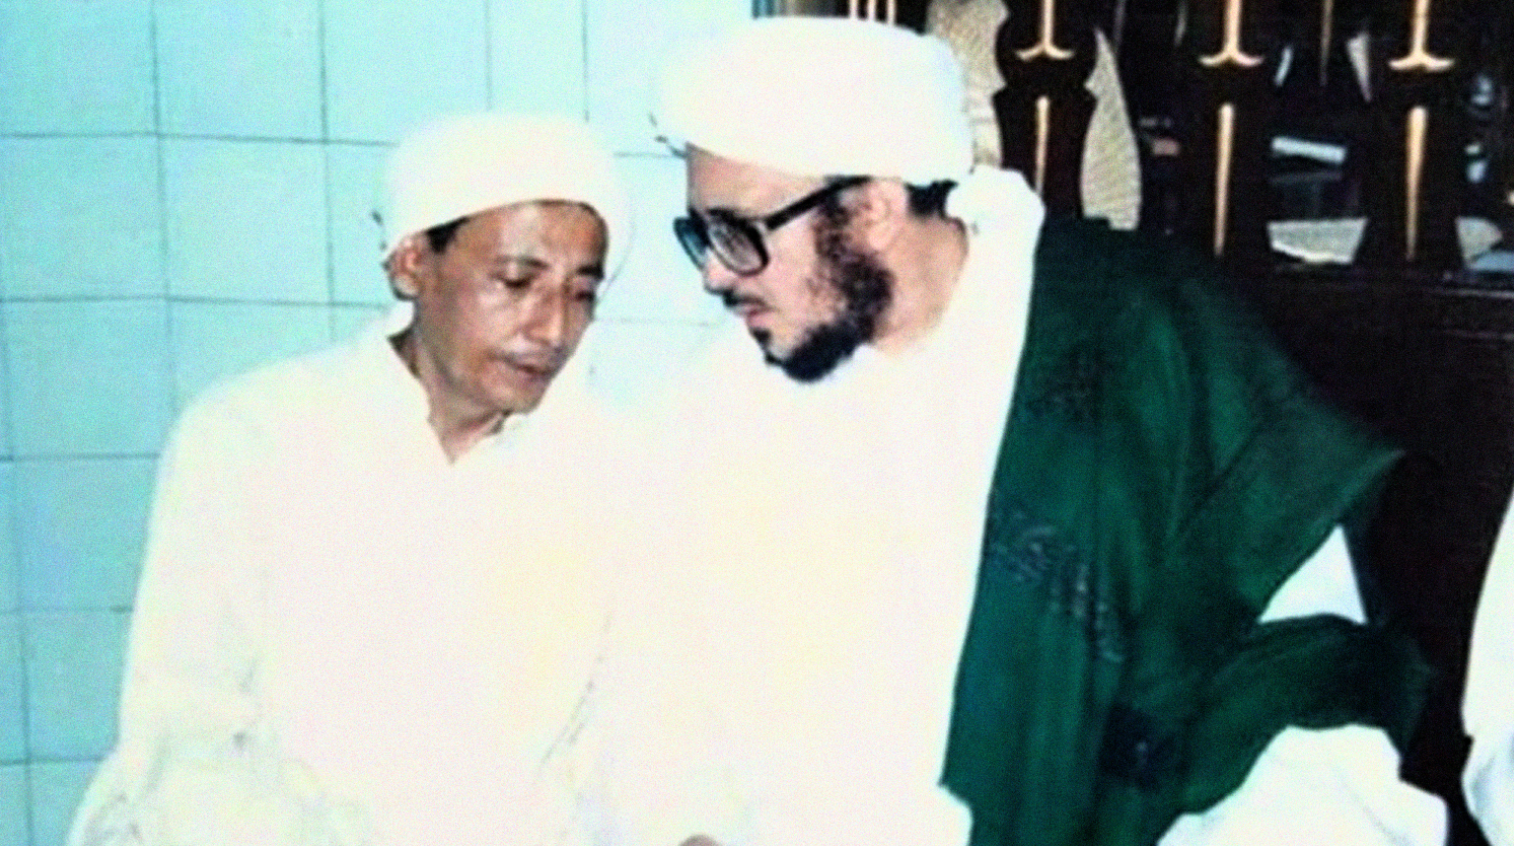 Habib Muhammad Luthfi bin Ali bin Hasyim bin Yahya Pekalongan bersama Sayid Muhammad bin Alawi al-Maliki. (Foto: Istimewa)